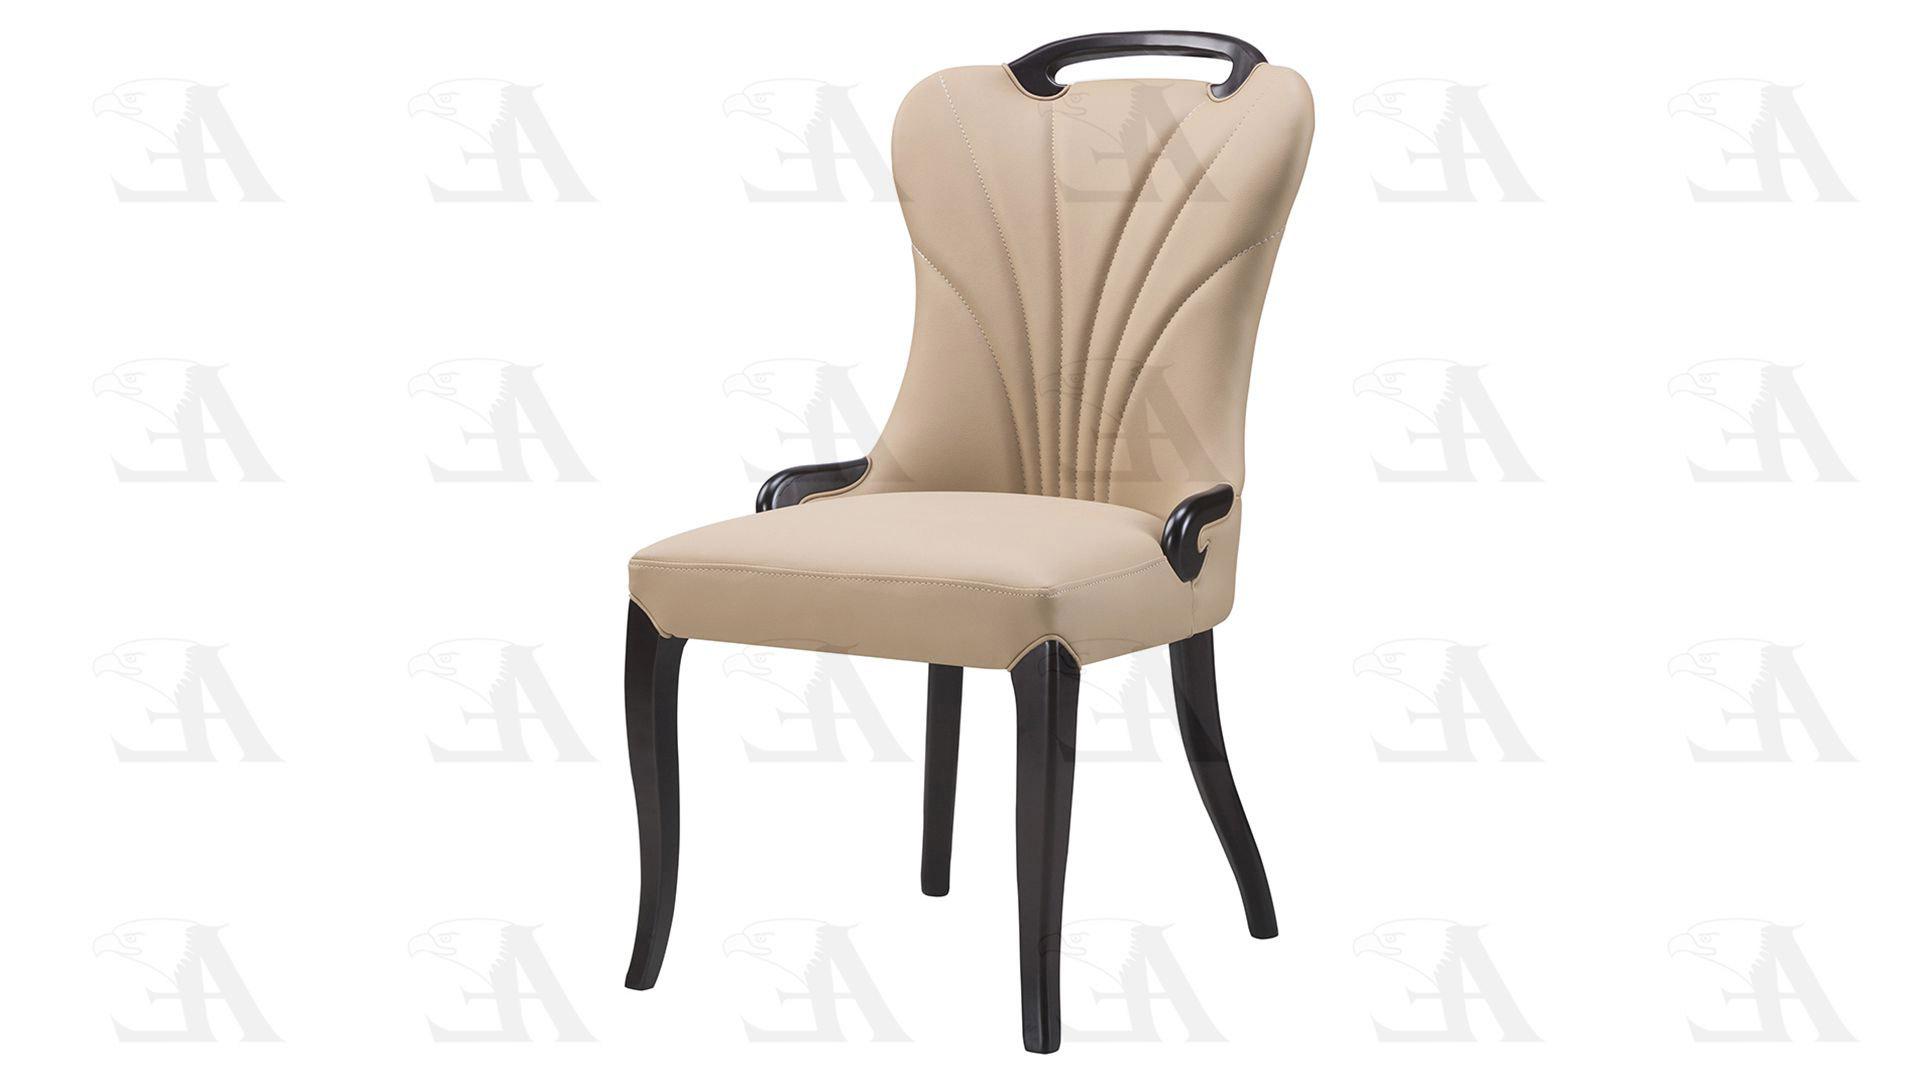 American Eagle Furniture CK-H604-TAN Dining Chair